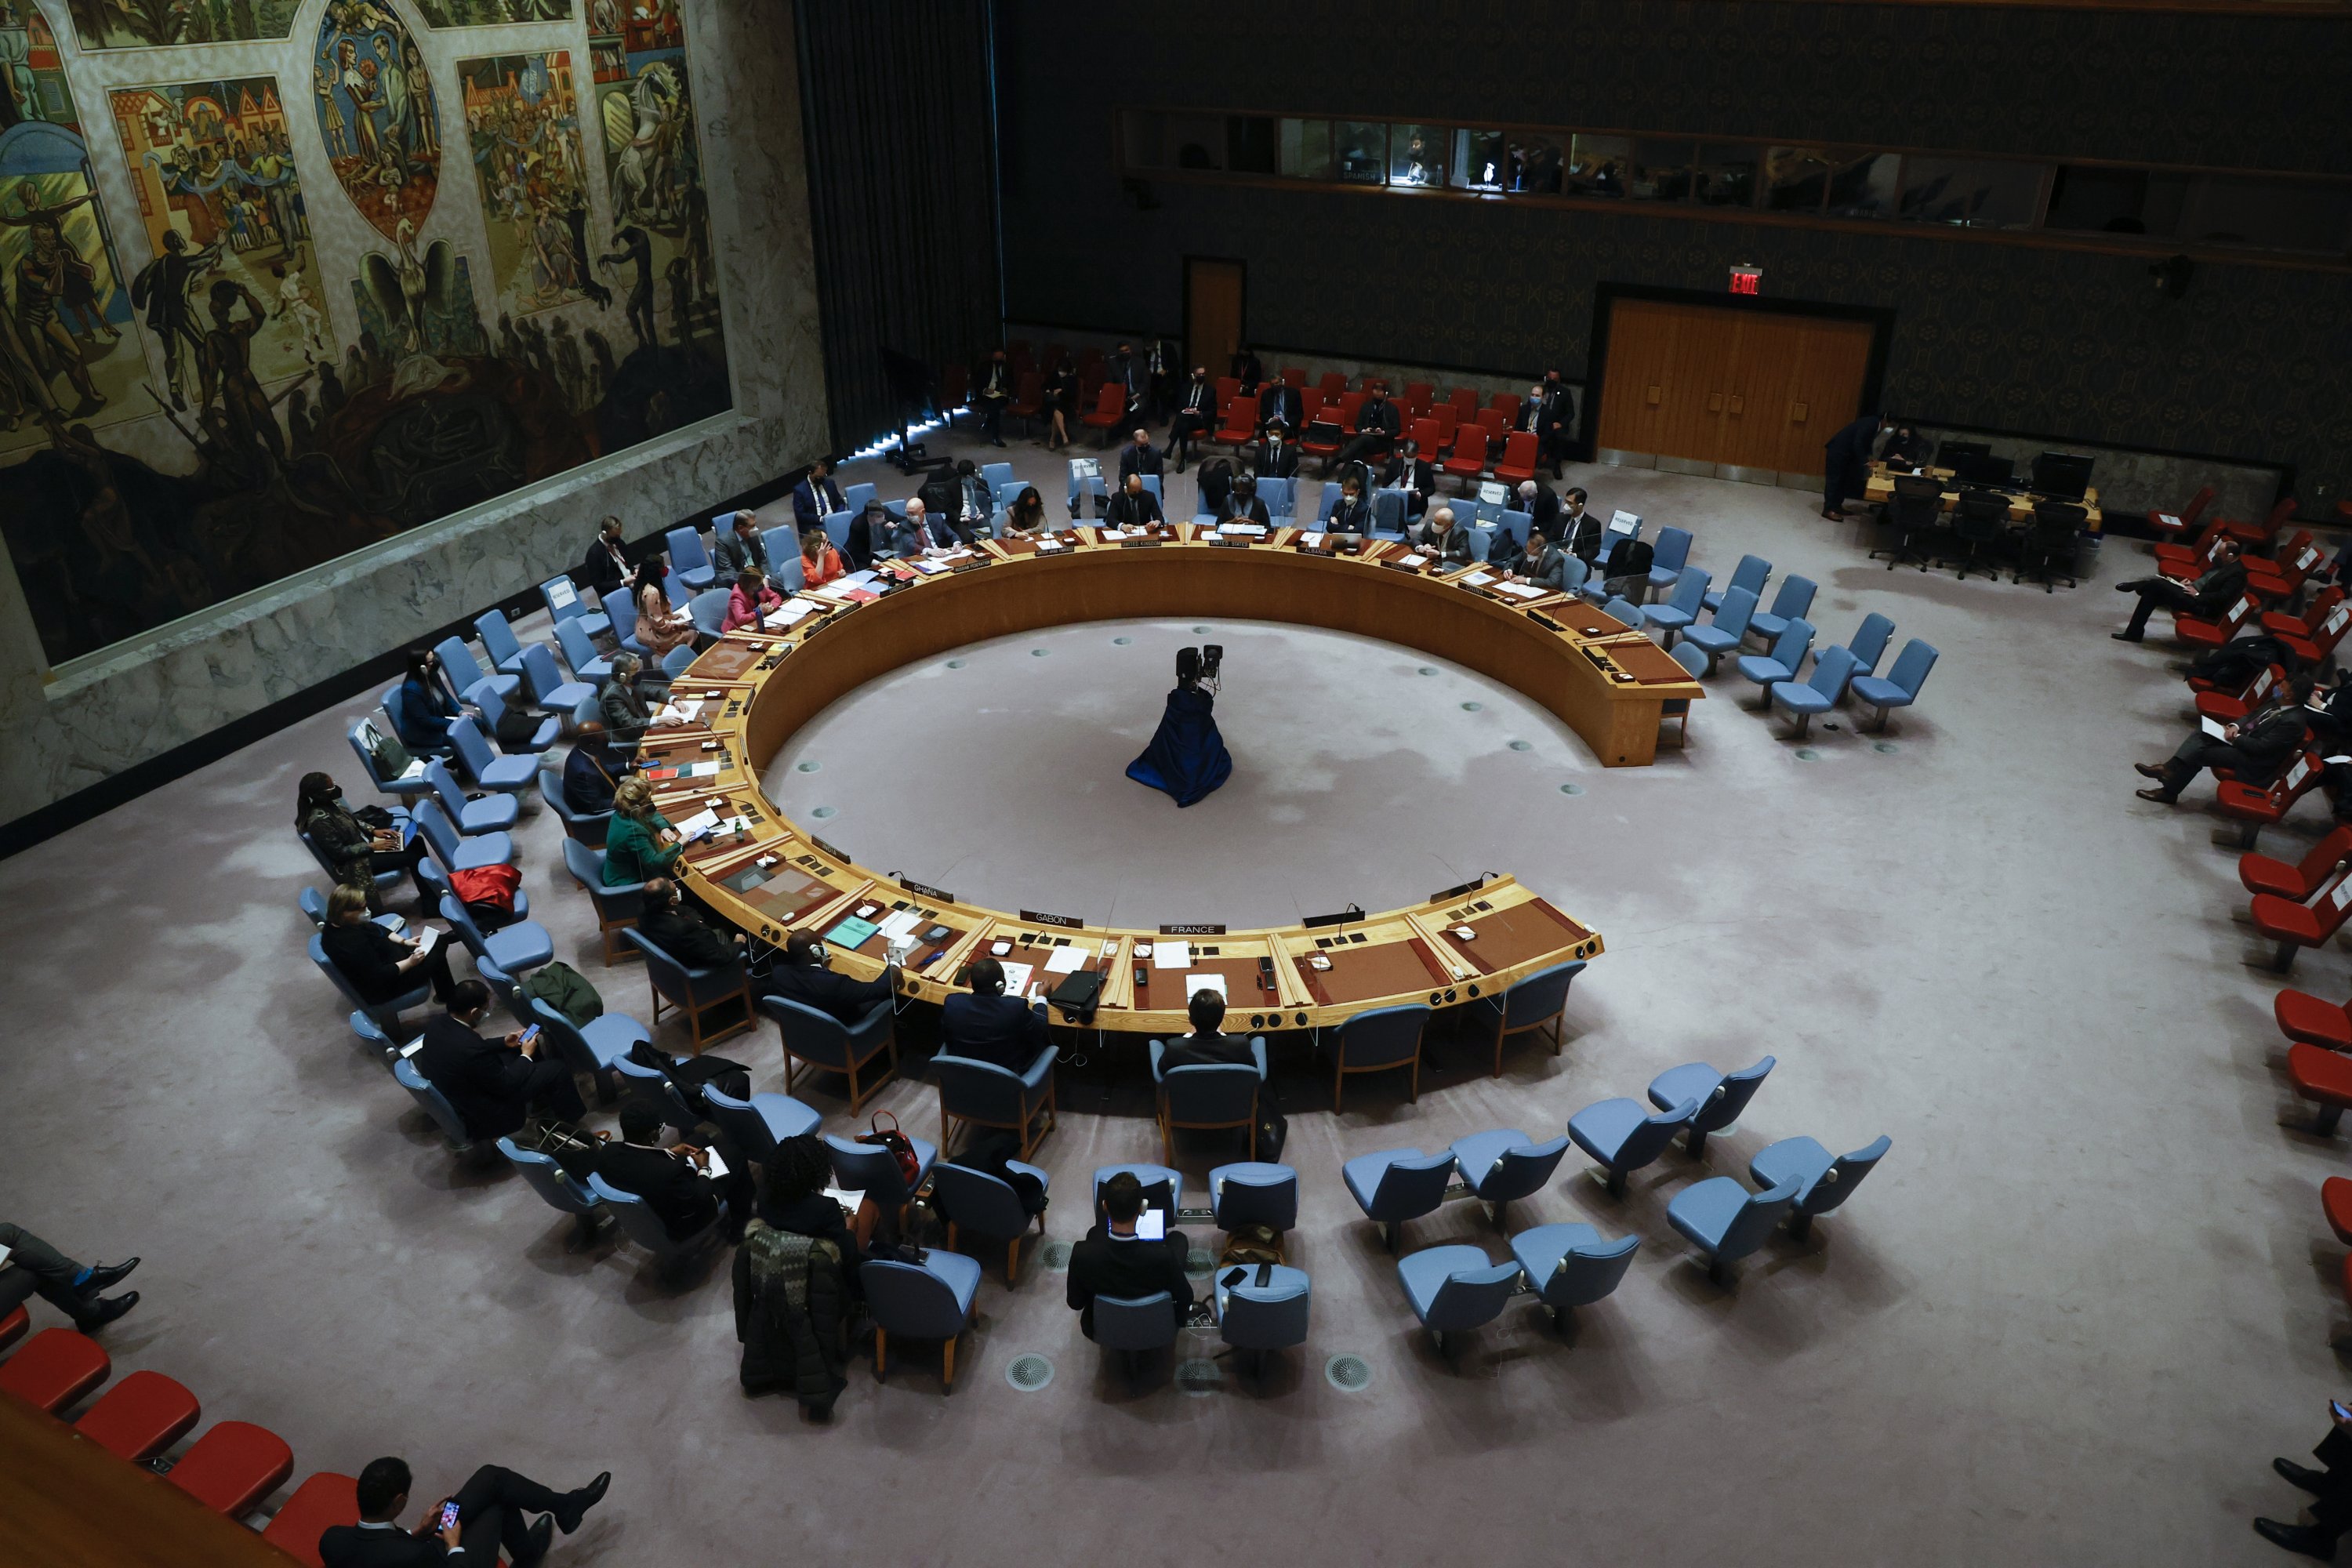 Russia, US exchange heated arguments over Ukraine at UN council meet | Daily Sabah